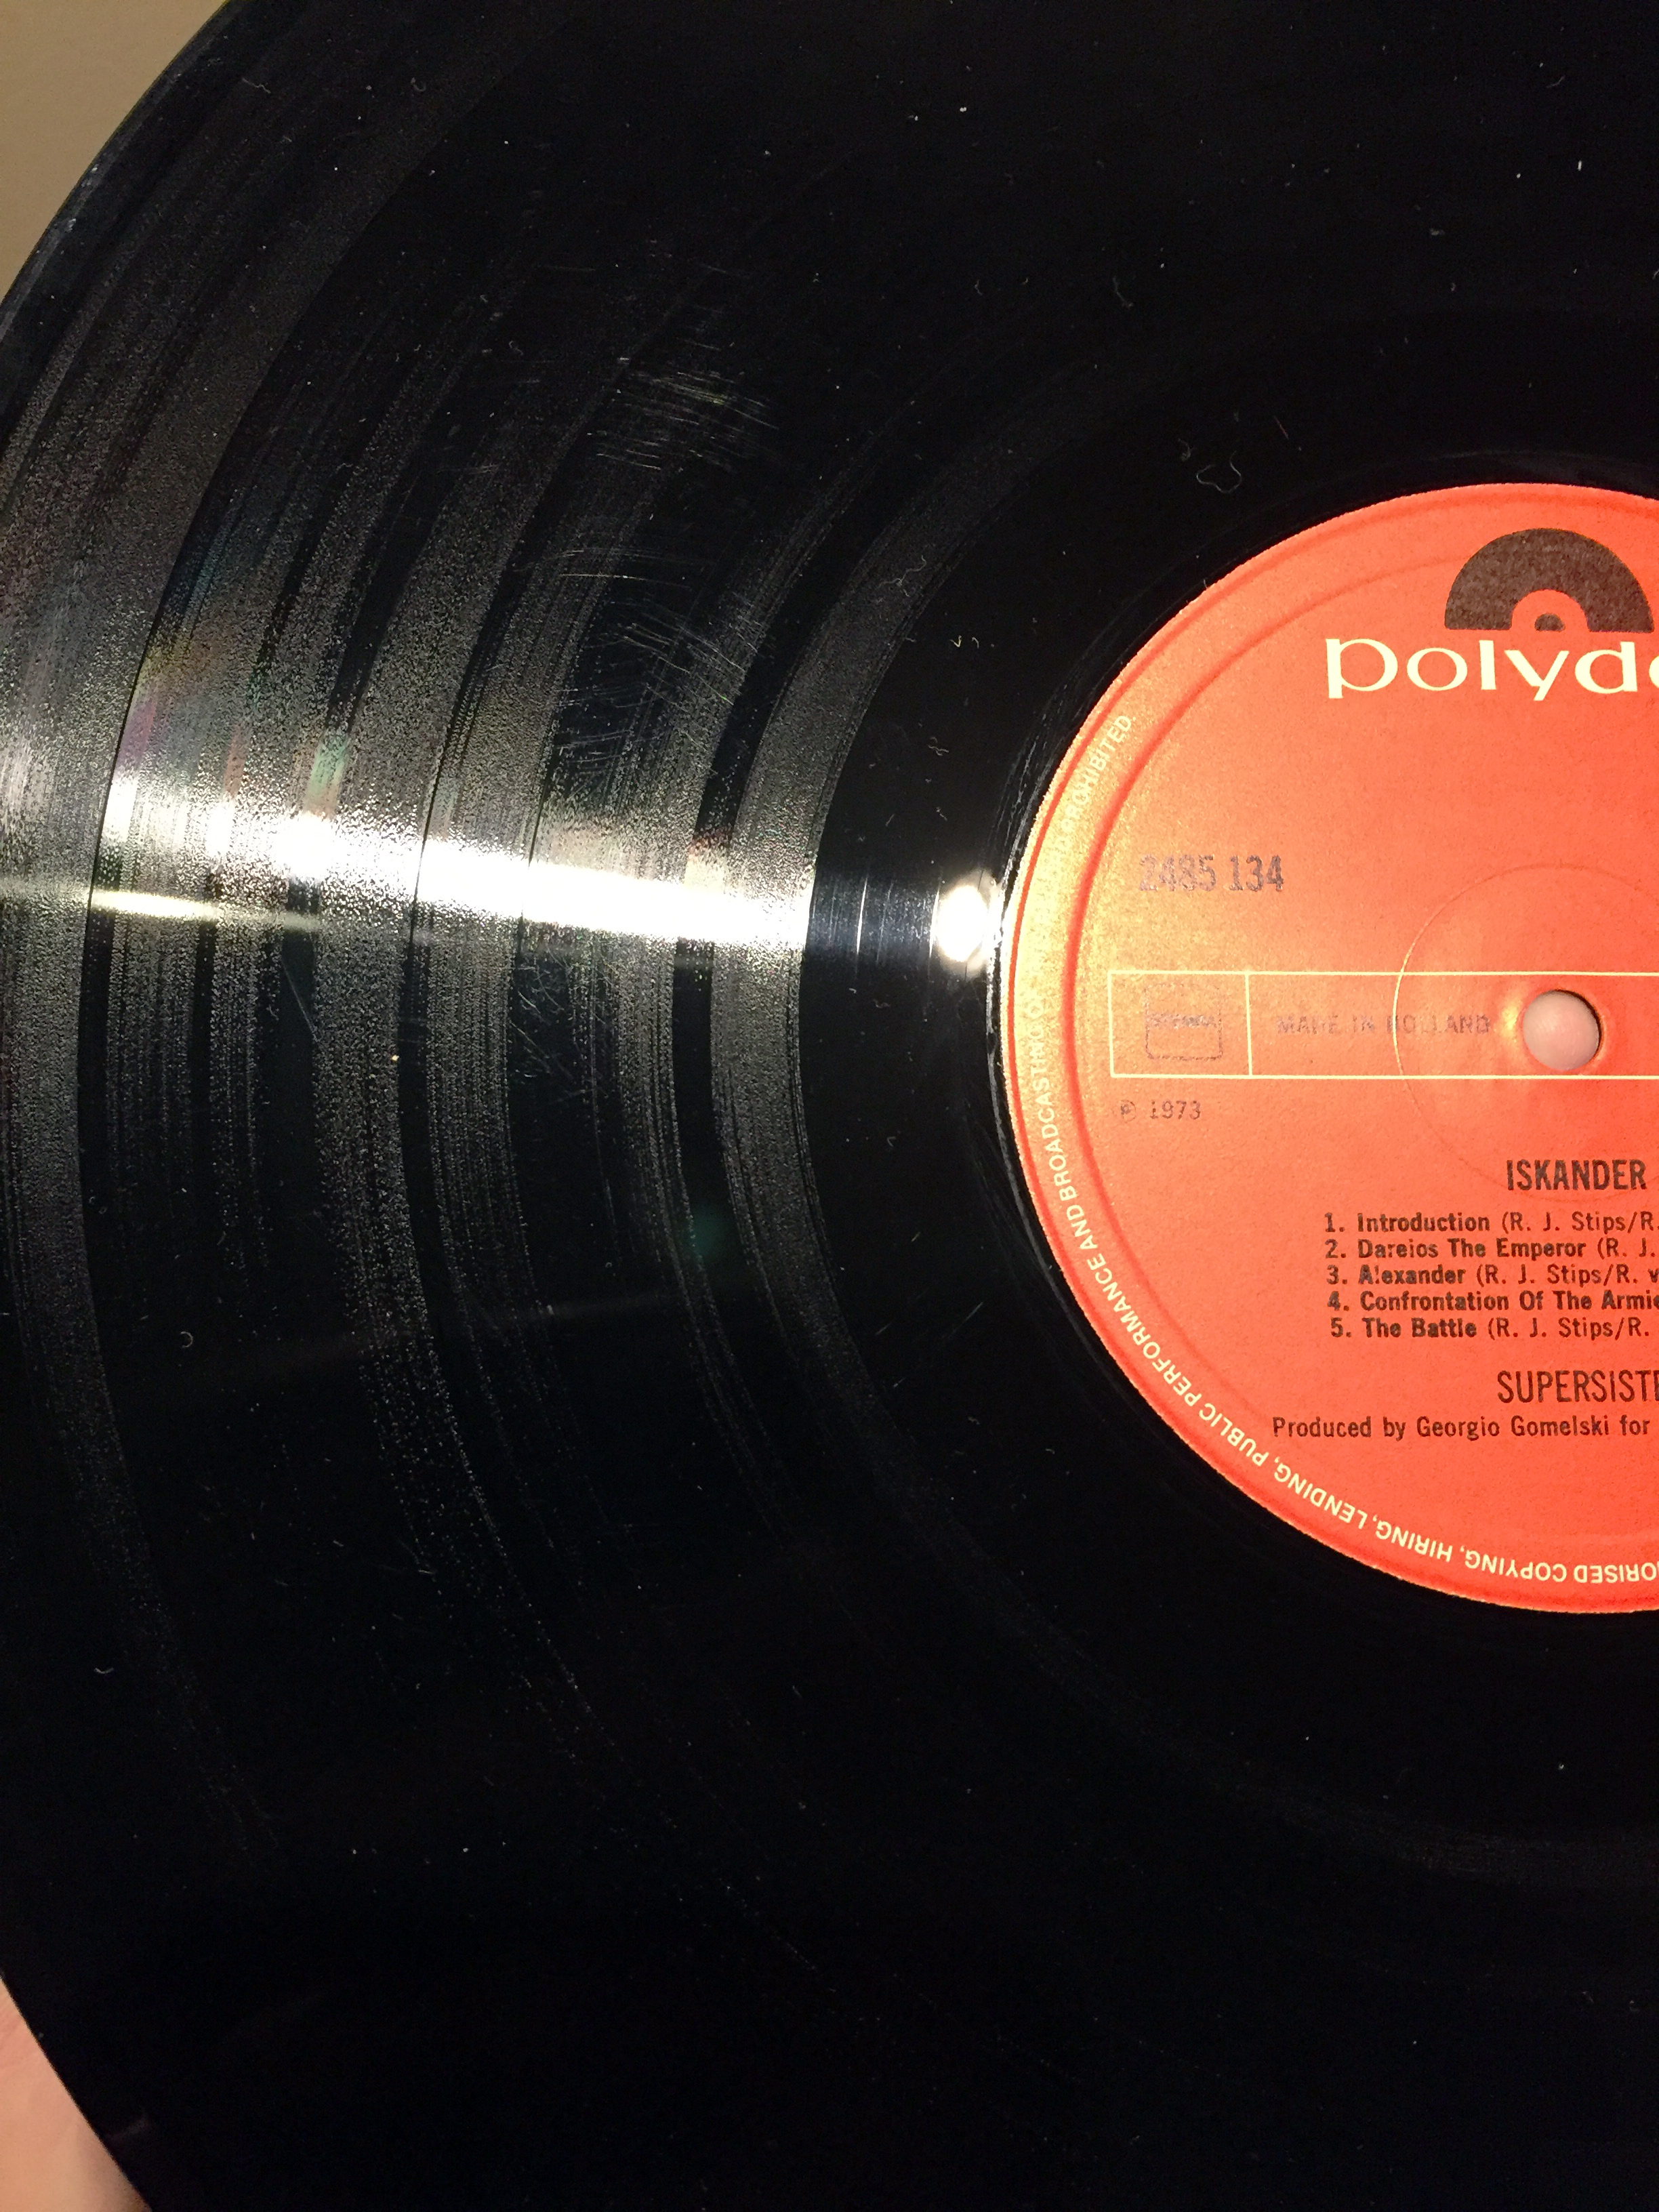 Grading The Vinyl Archivist